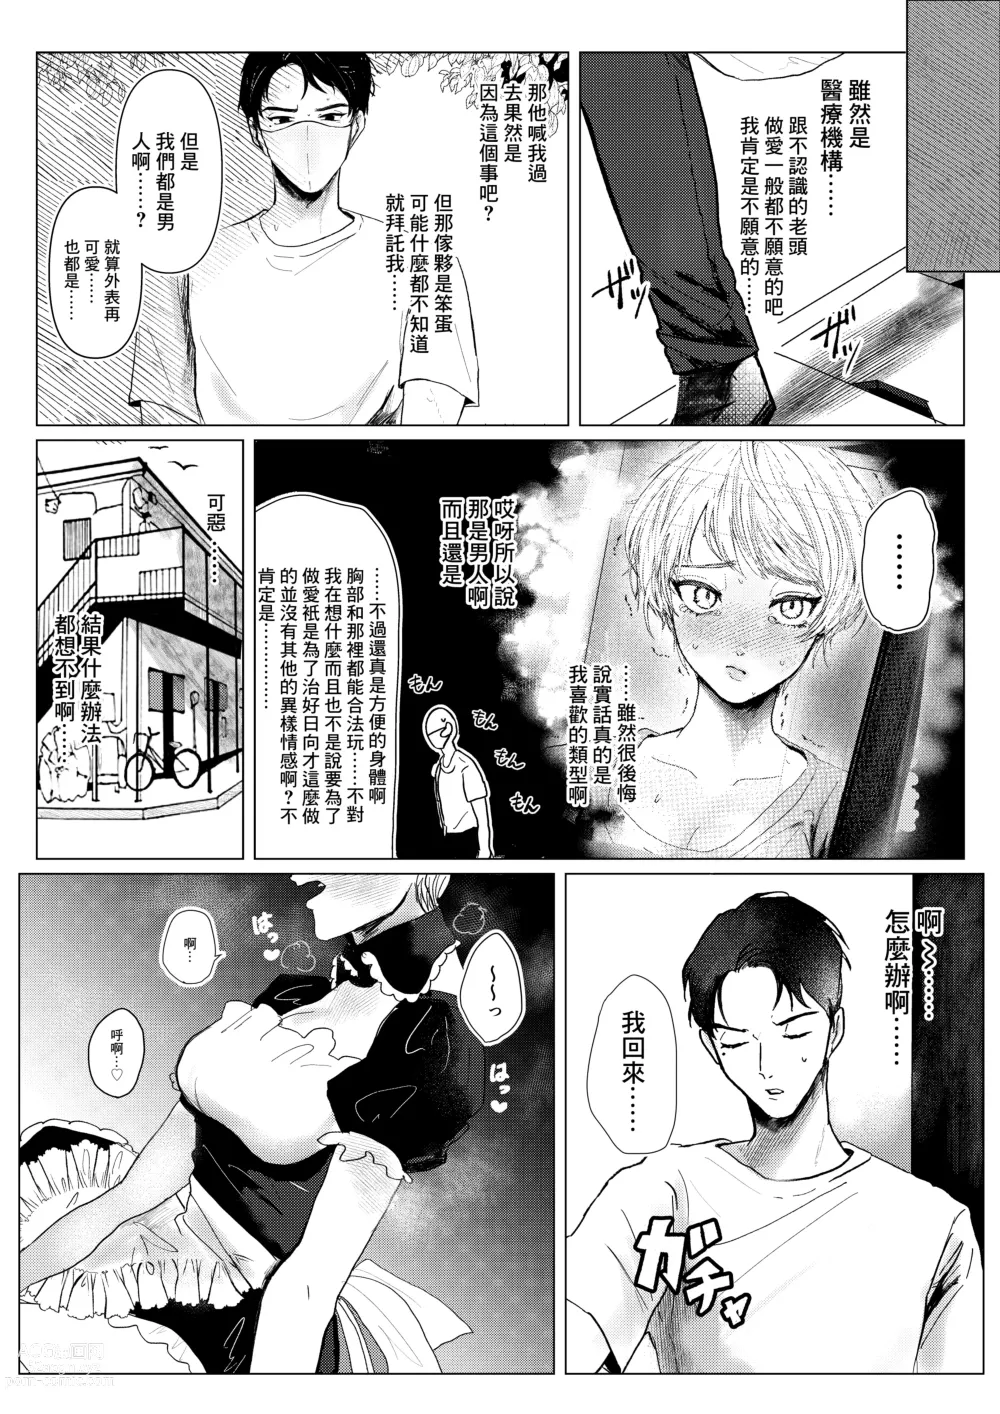 Page 8 of doujinshi Shingata!? TS Virus